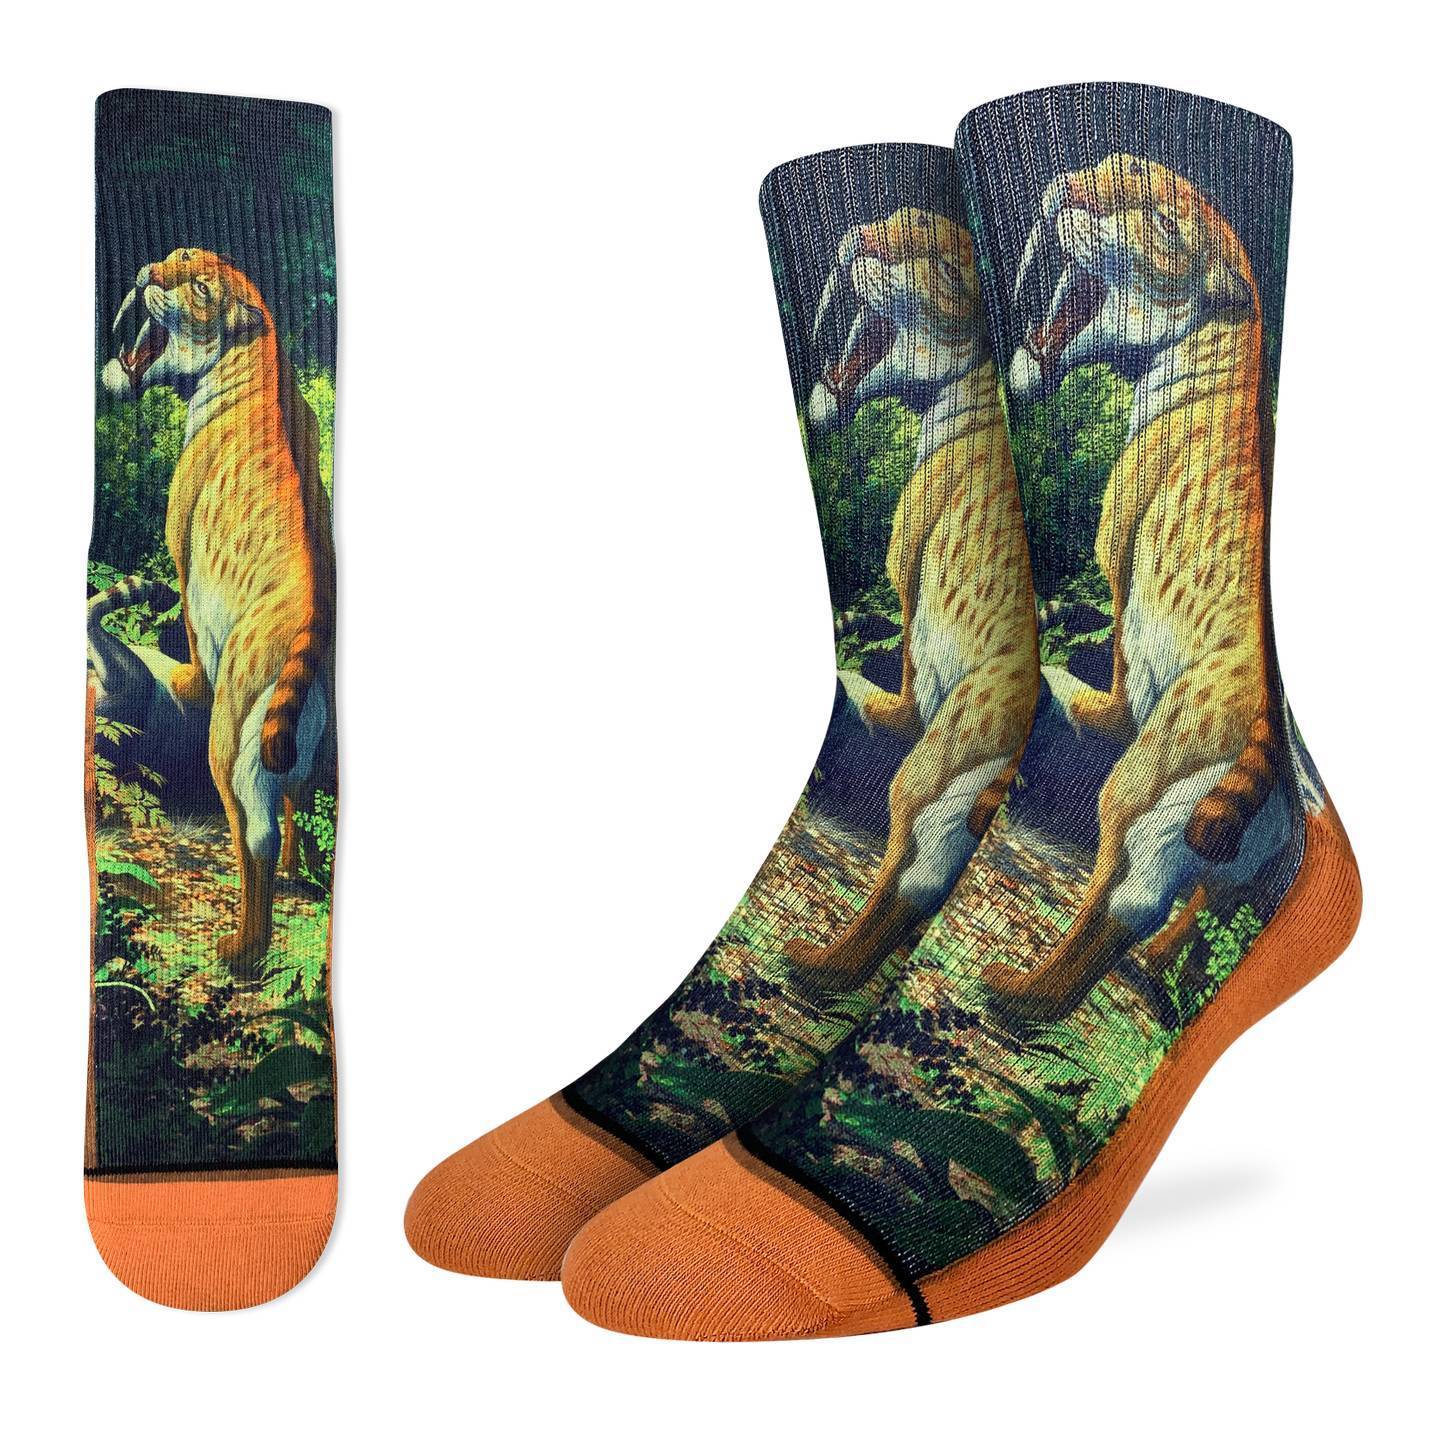 Saber-cat socks size 8-13